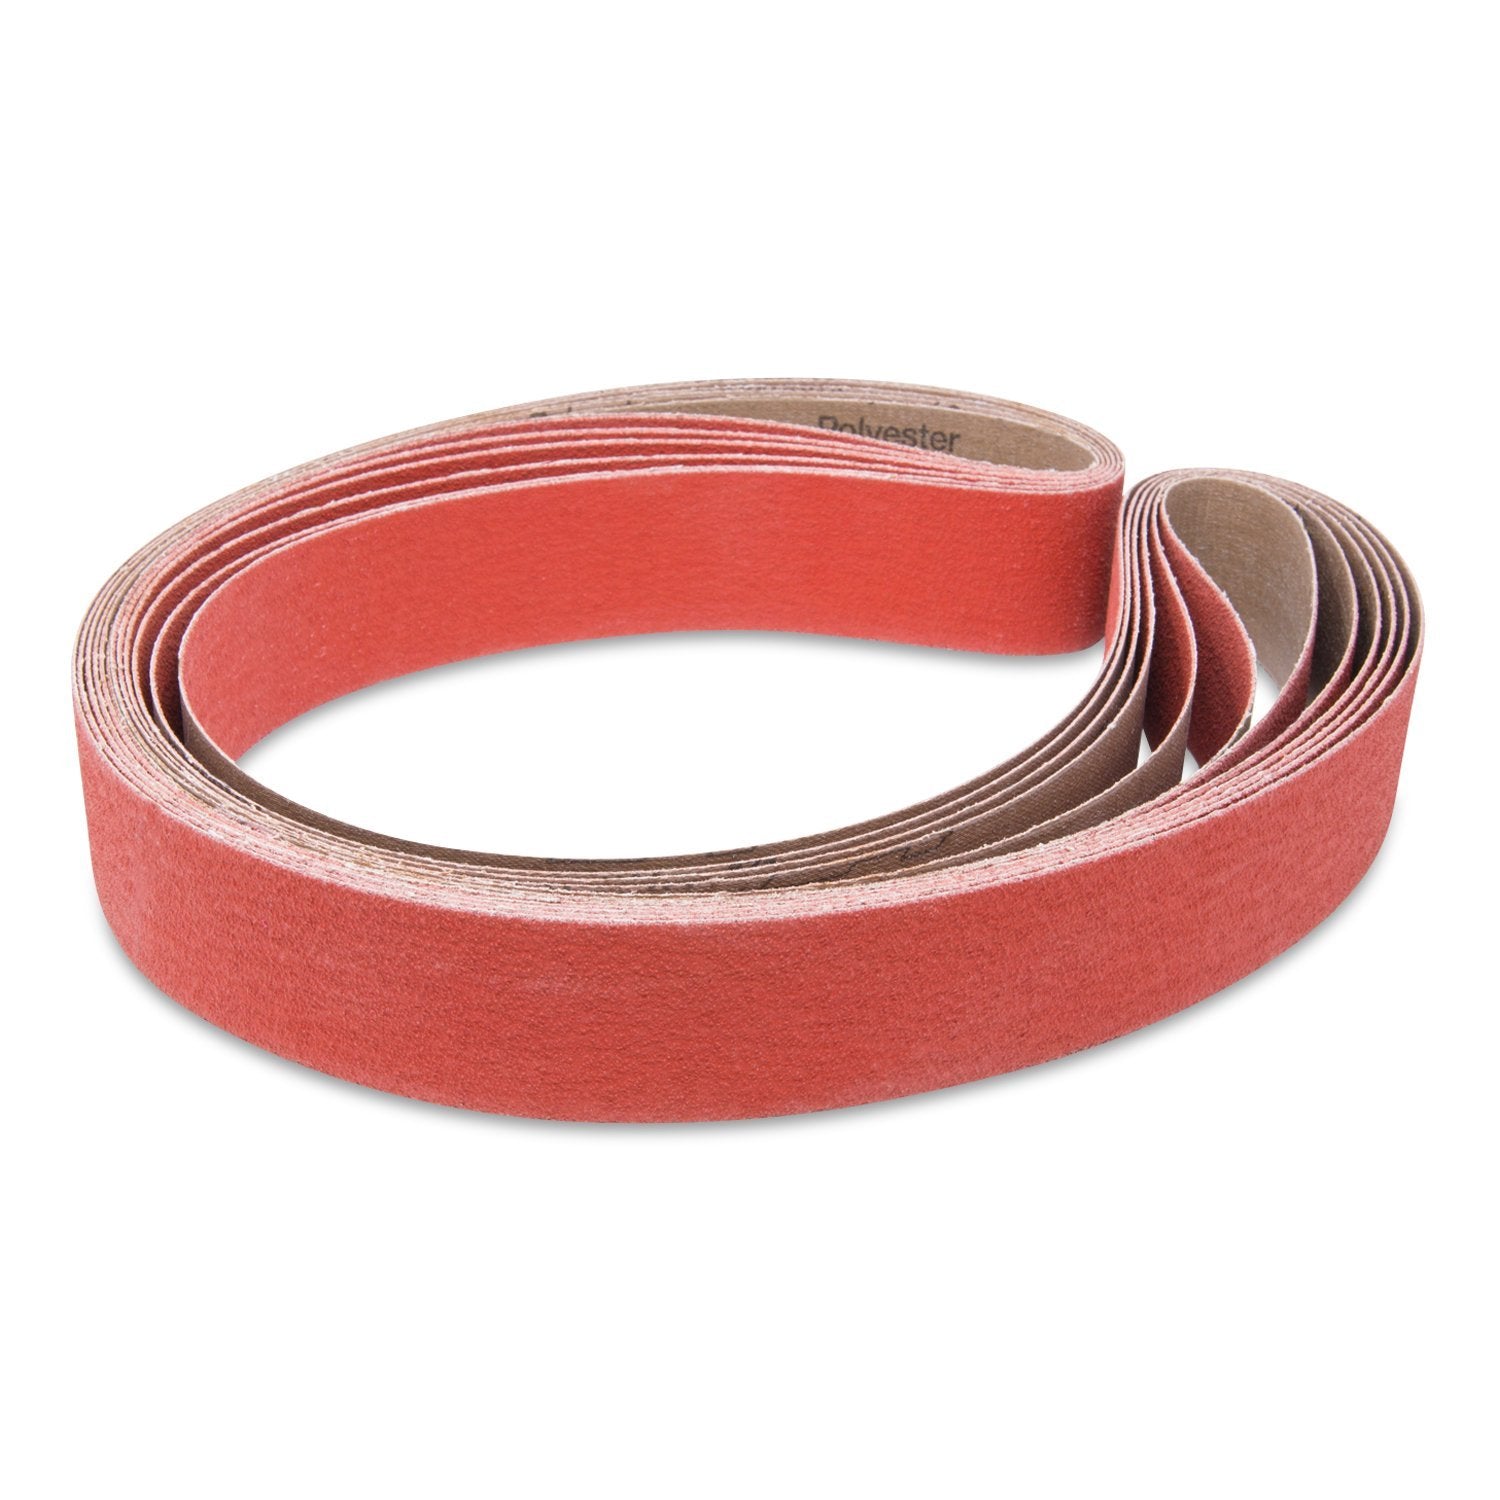 2 x 72 Inch EdgeCore Premium Ceramic Grinding Sanding Belts - The